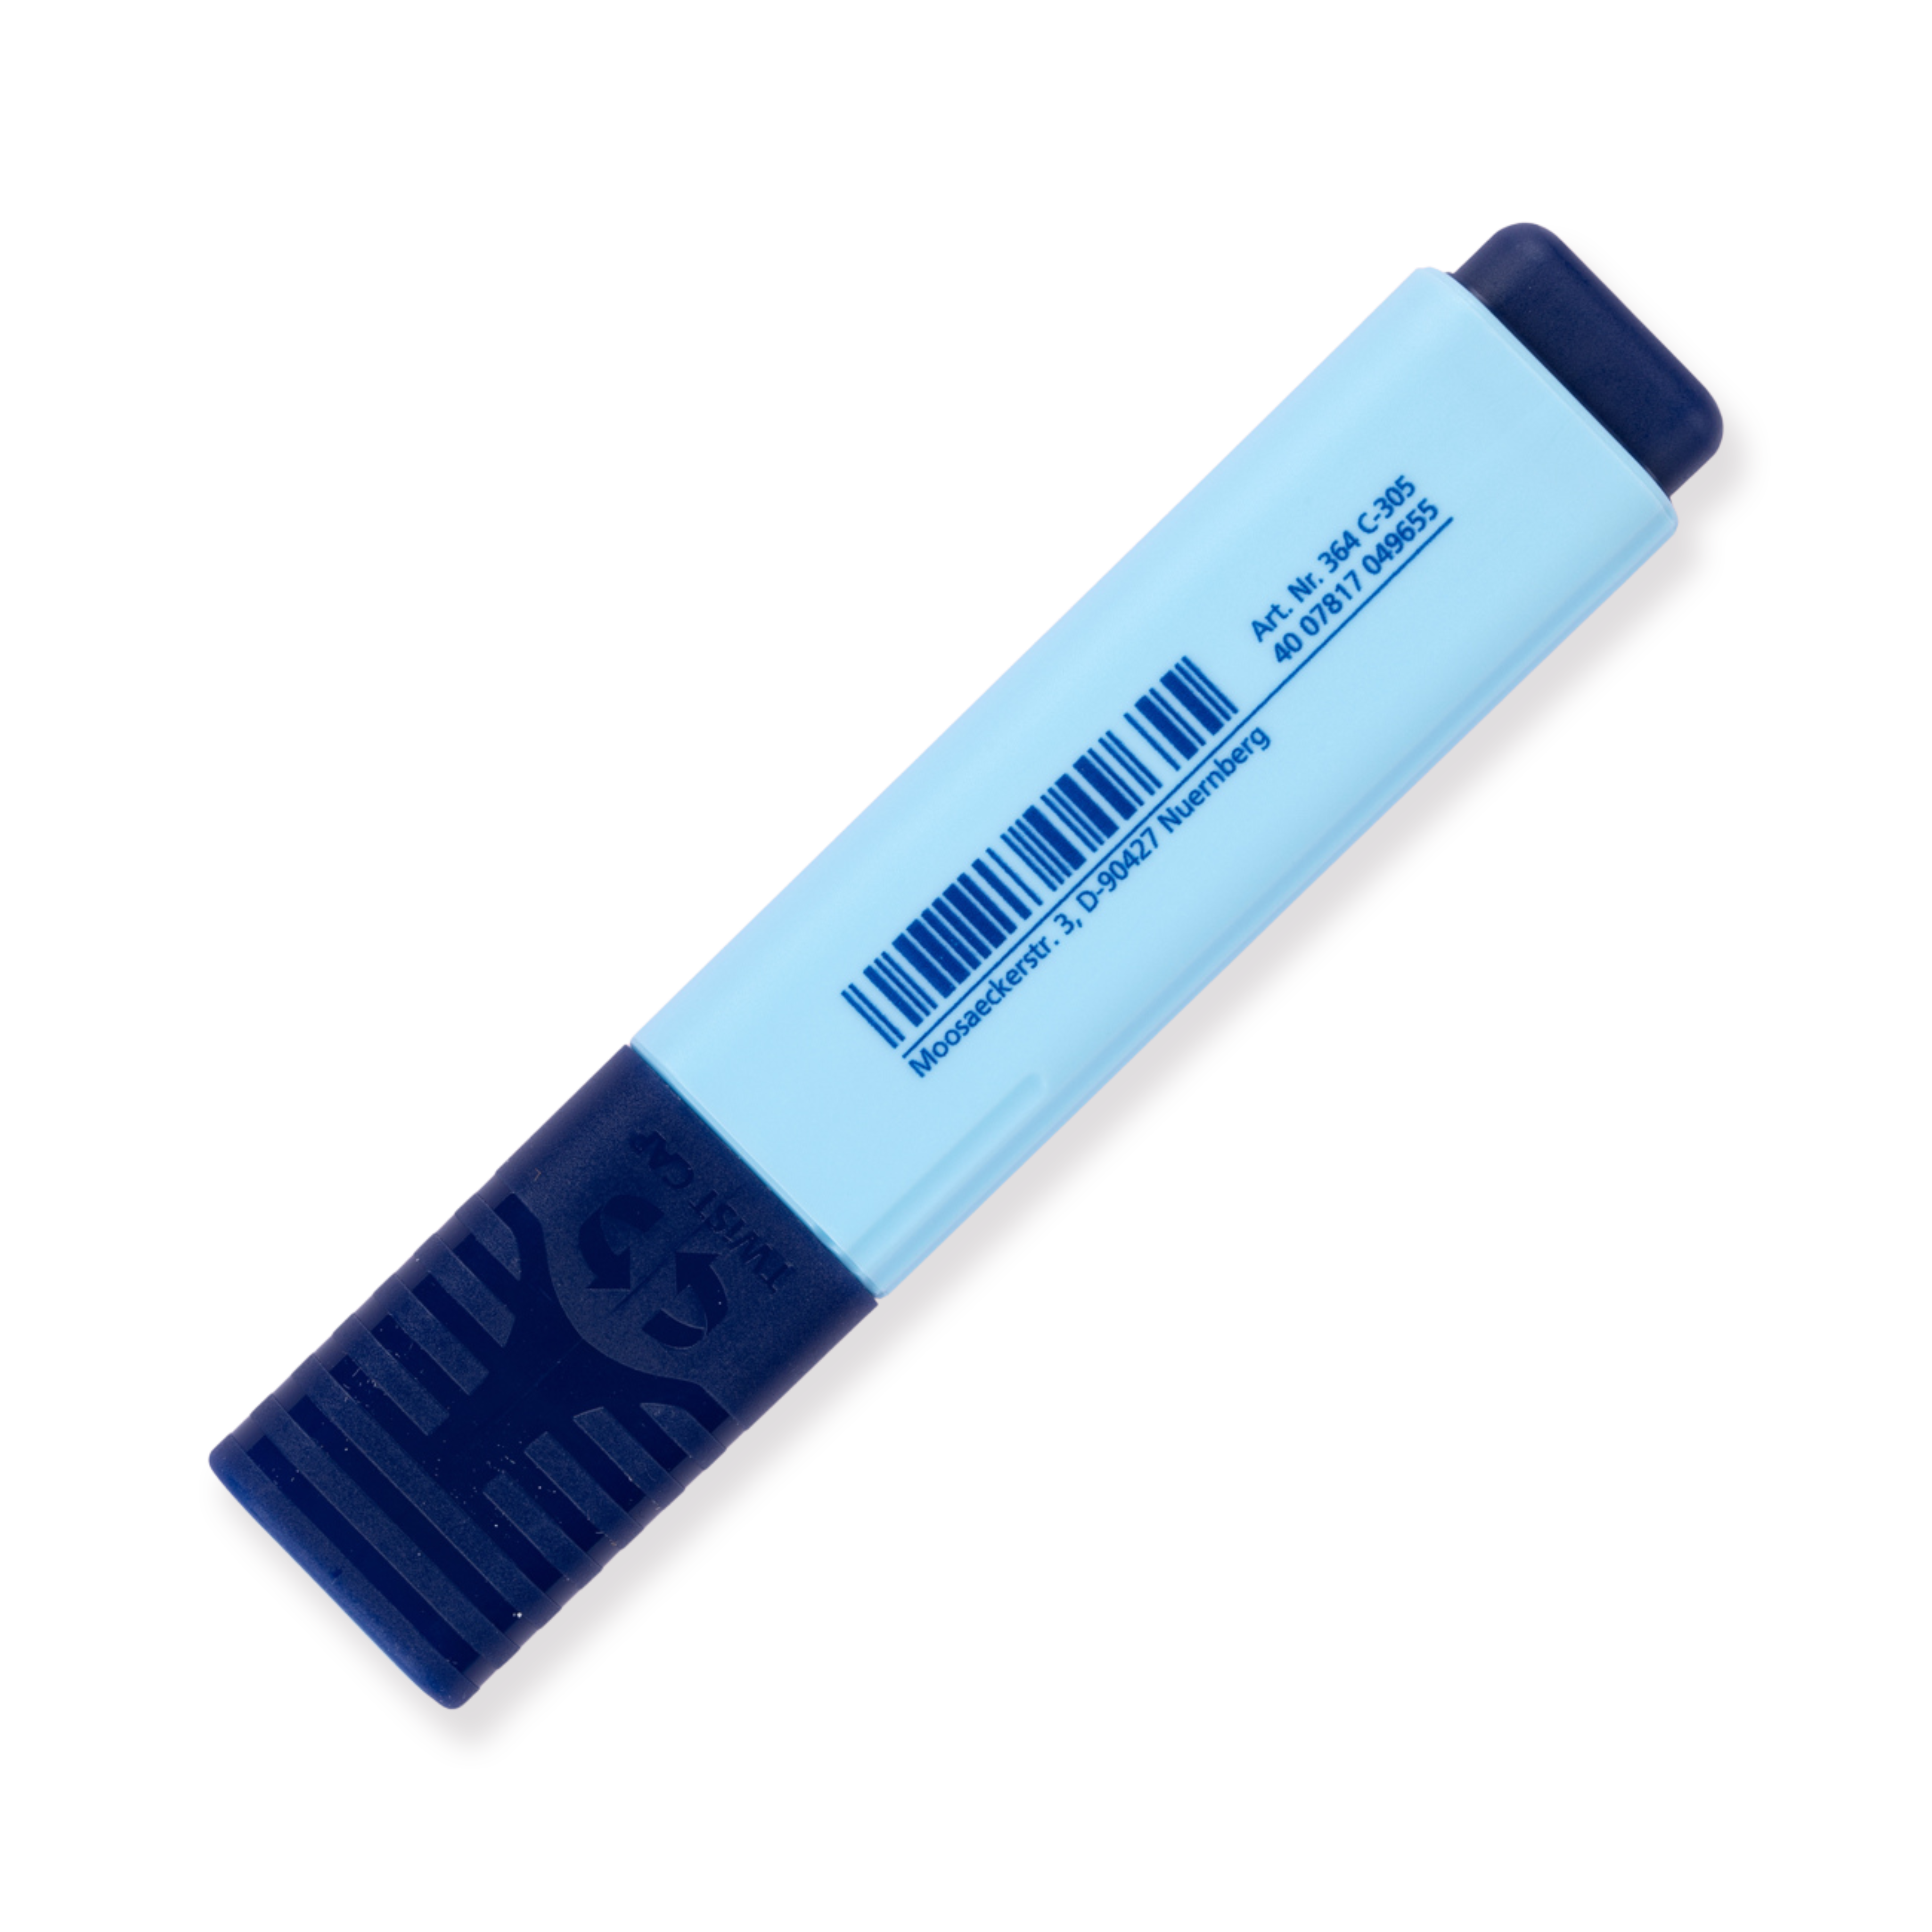 Staedtler Textsurfer Classic Highlighter Pen - Sky Blue